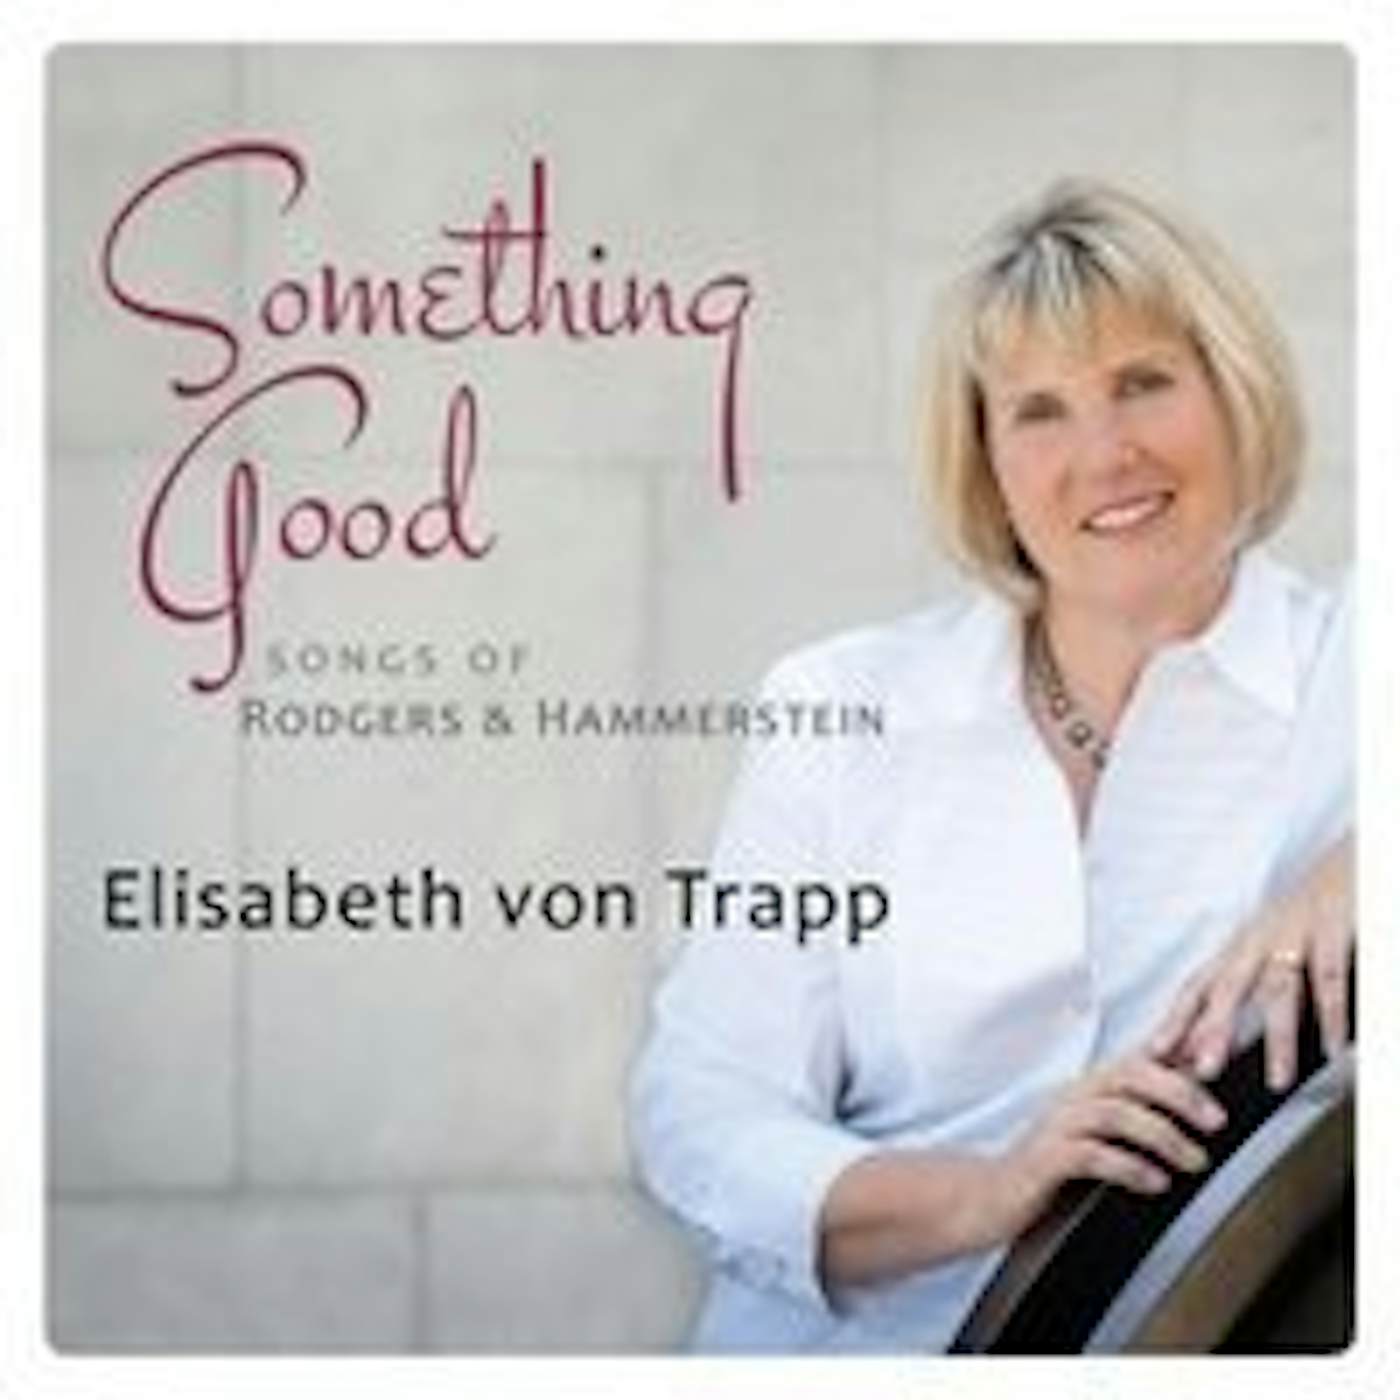 Elisabeth Von Trapp SOMETHING GOOD: SONGS OF RODGERS & HAMMERSTEIN CD